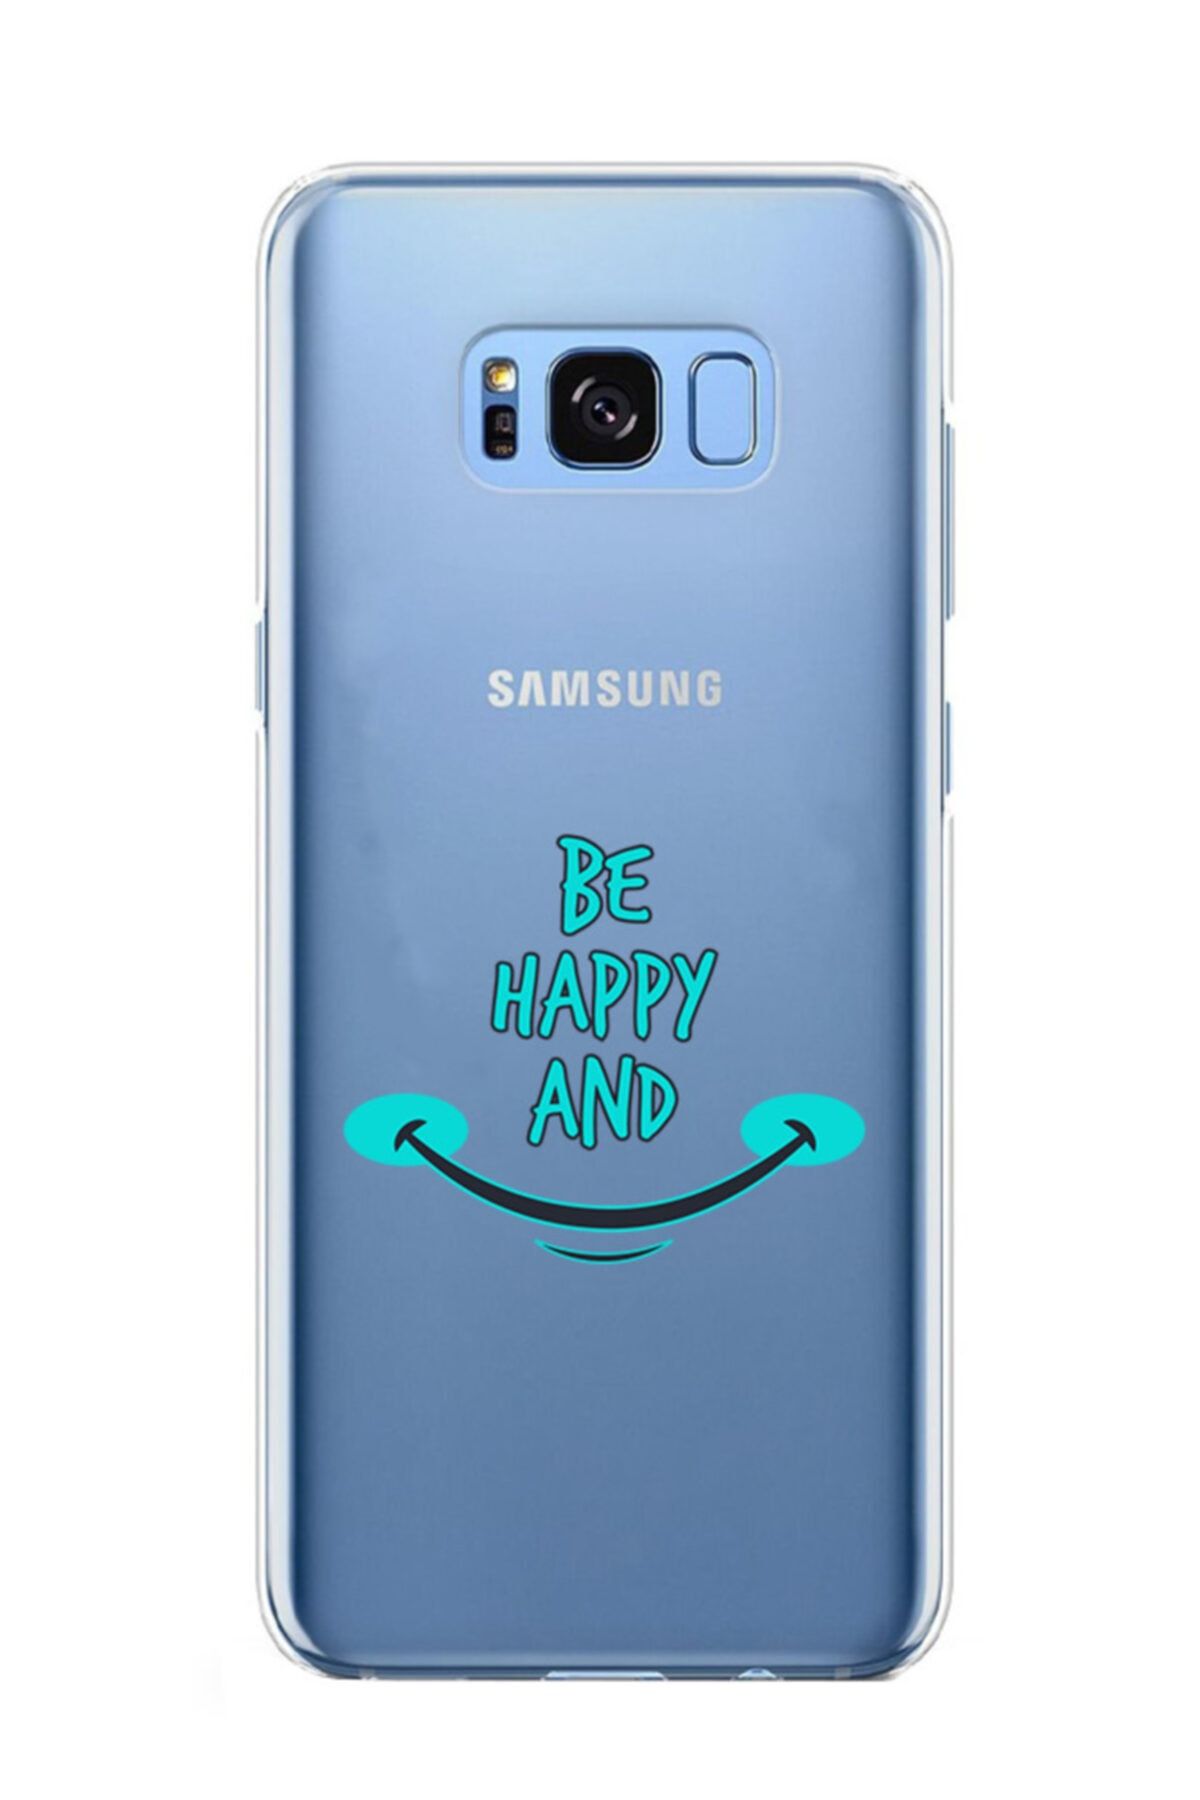 Dafhi Aksesuar Dafhi Samsung Galaxy S8 Plus Be Happy And Telefon Kılıfı